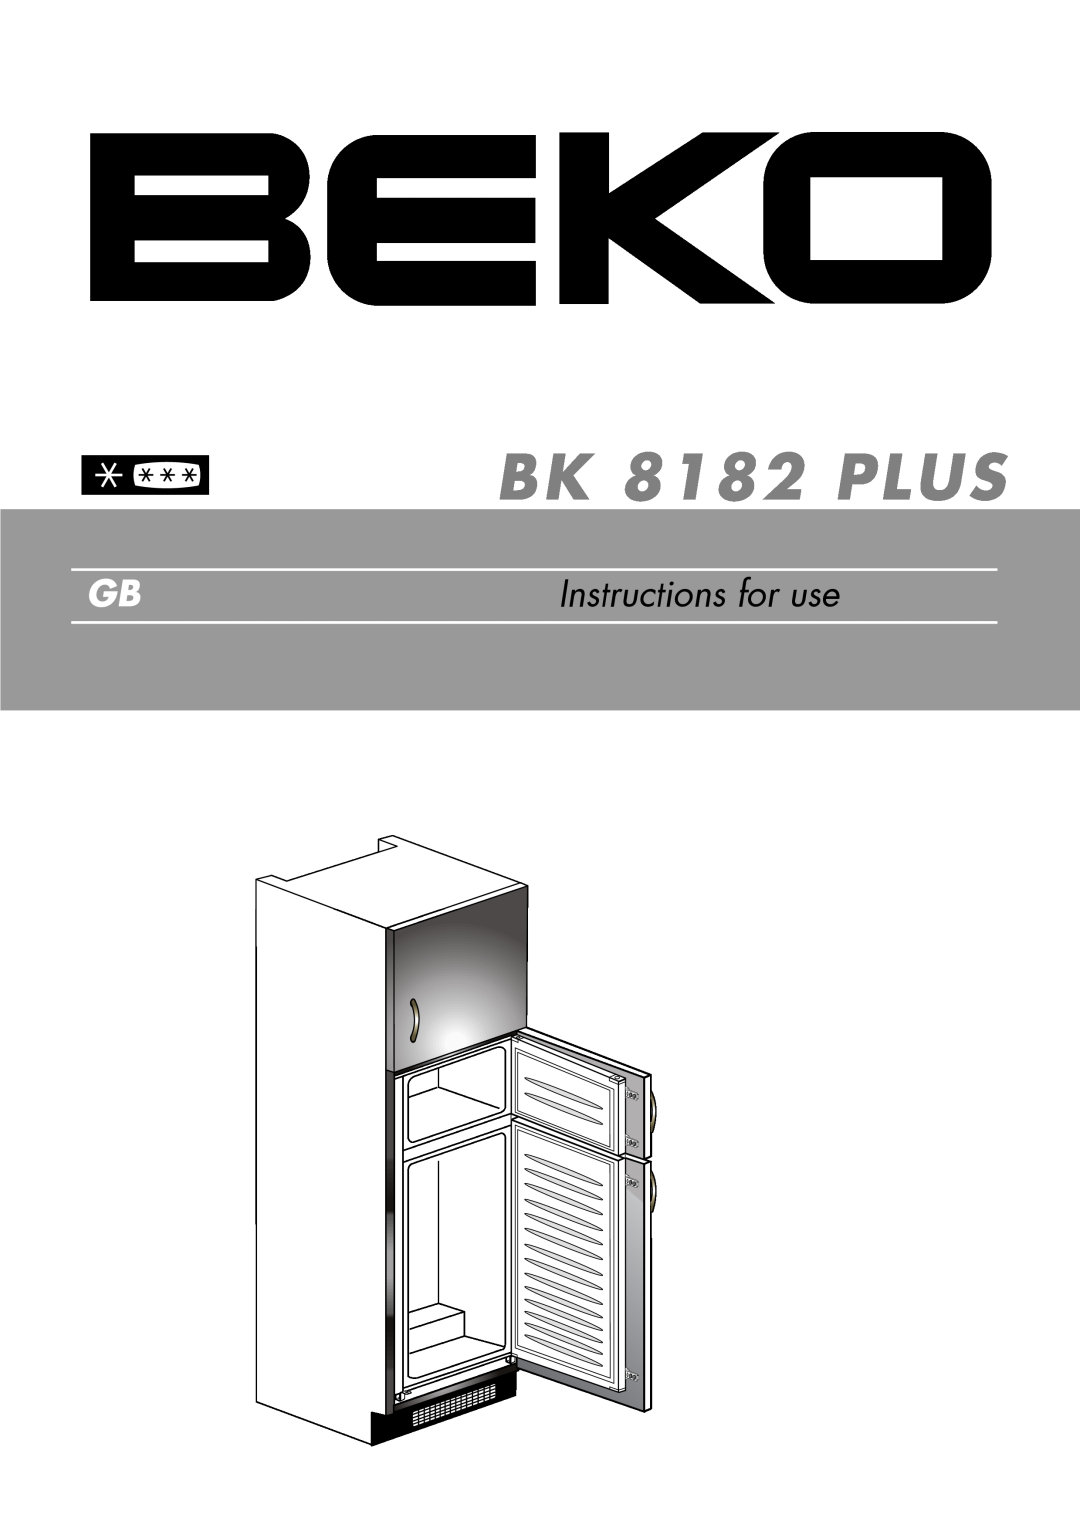 Beko manual Instructions for use, BK 8182 PLUS 